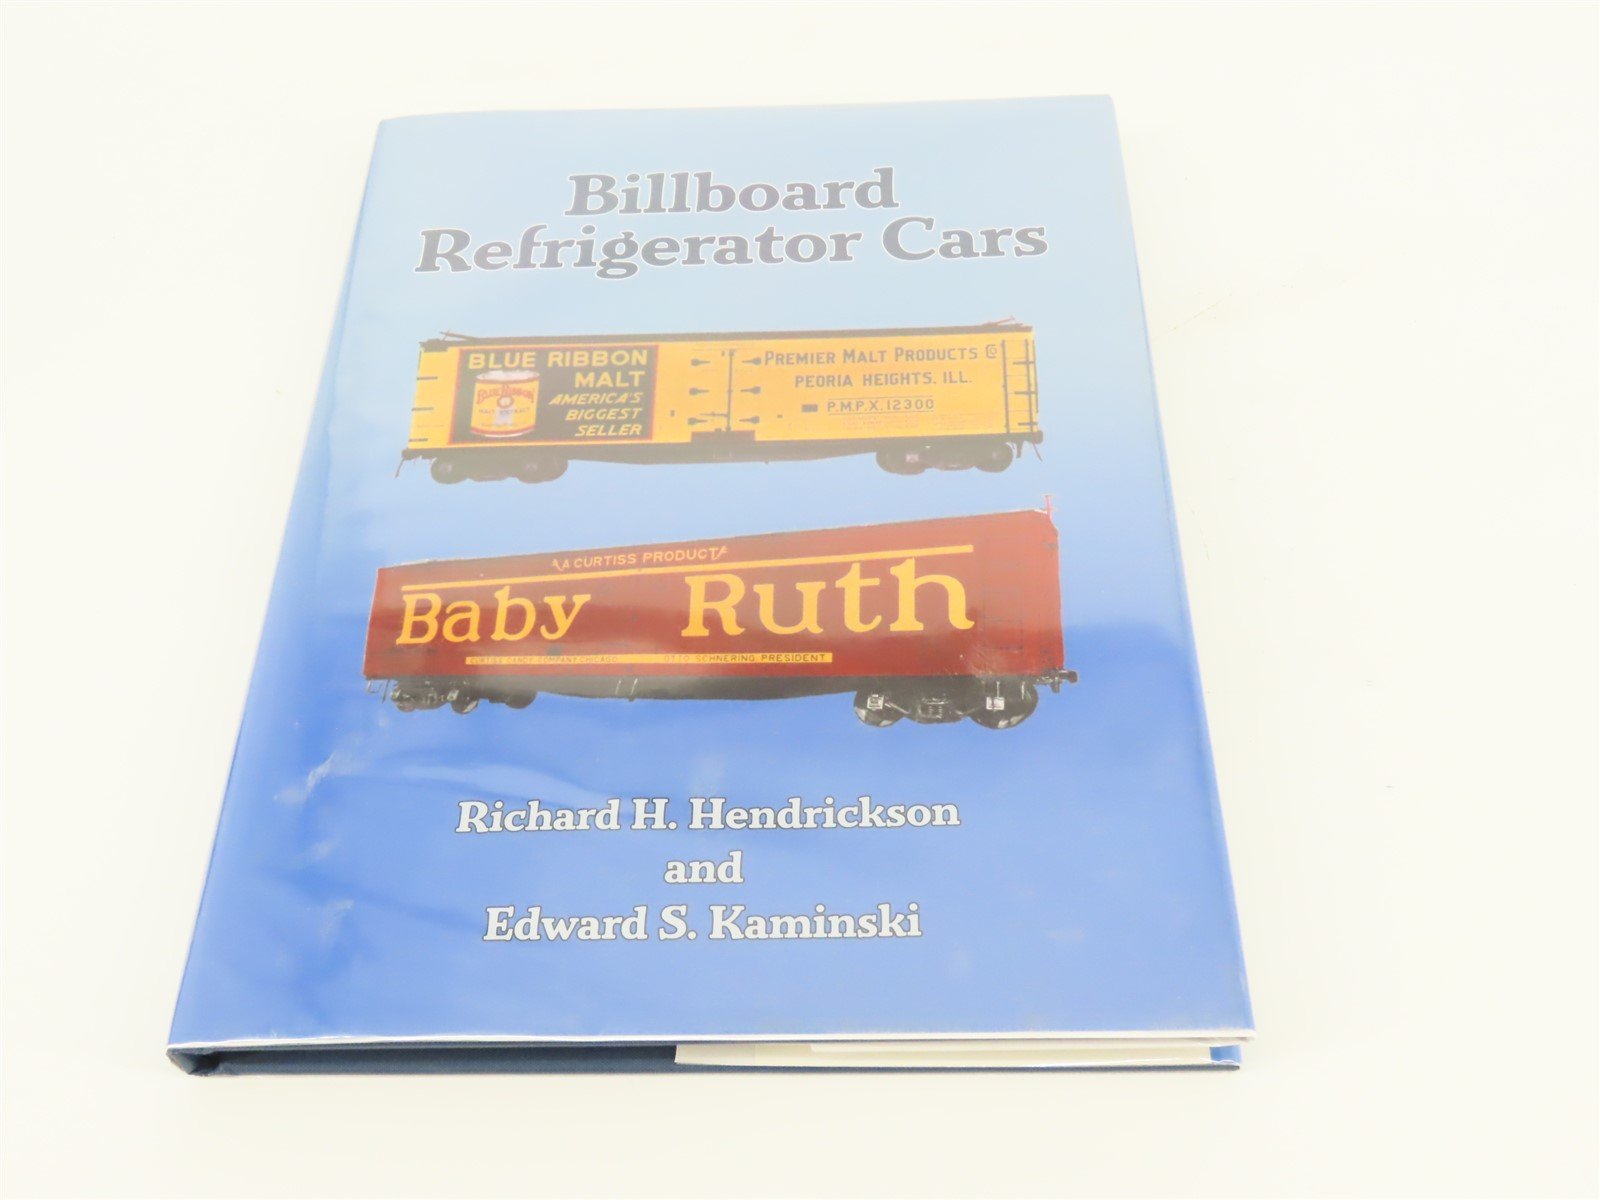 Billboard Refrigerator Cars by R.H. Hendrickson & E.S. Kaminski ©2008 HC Book